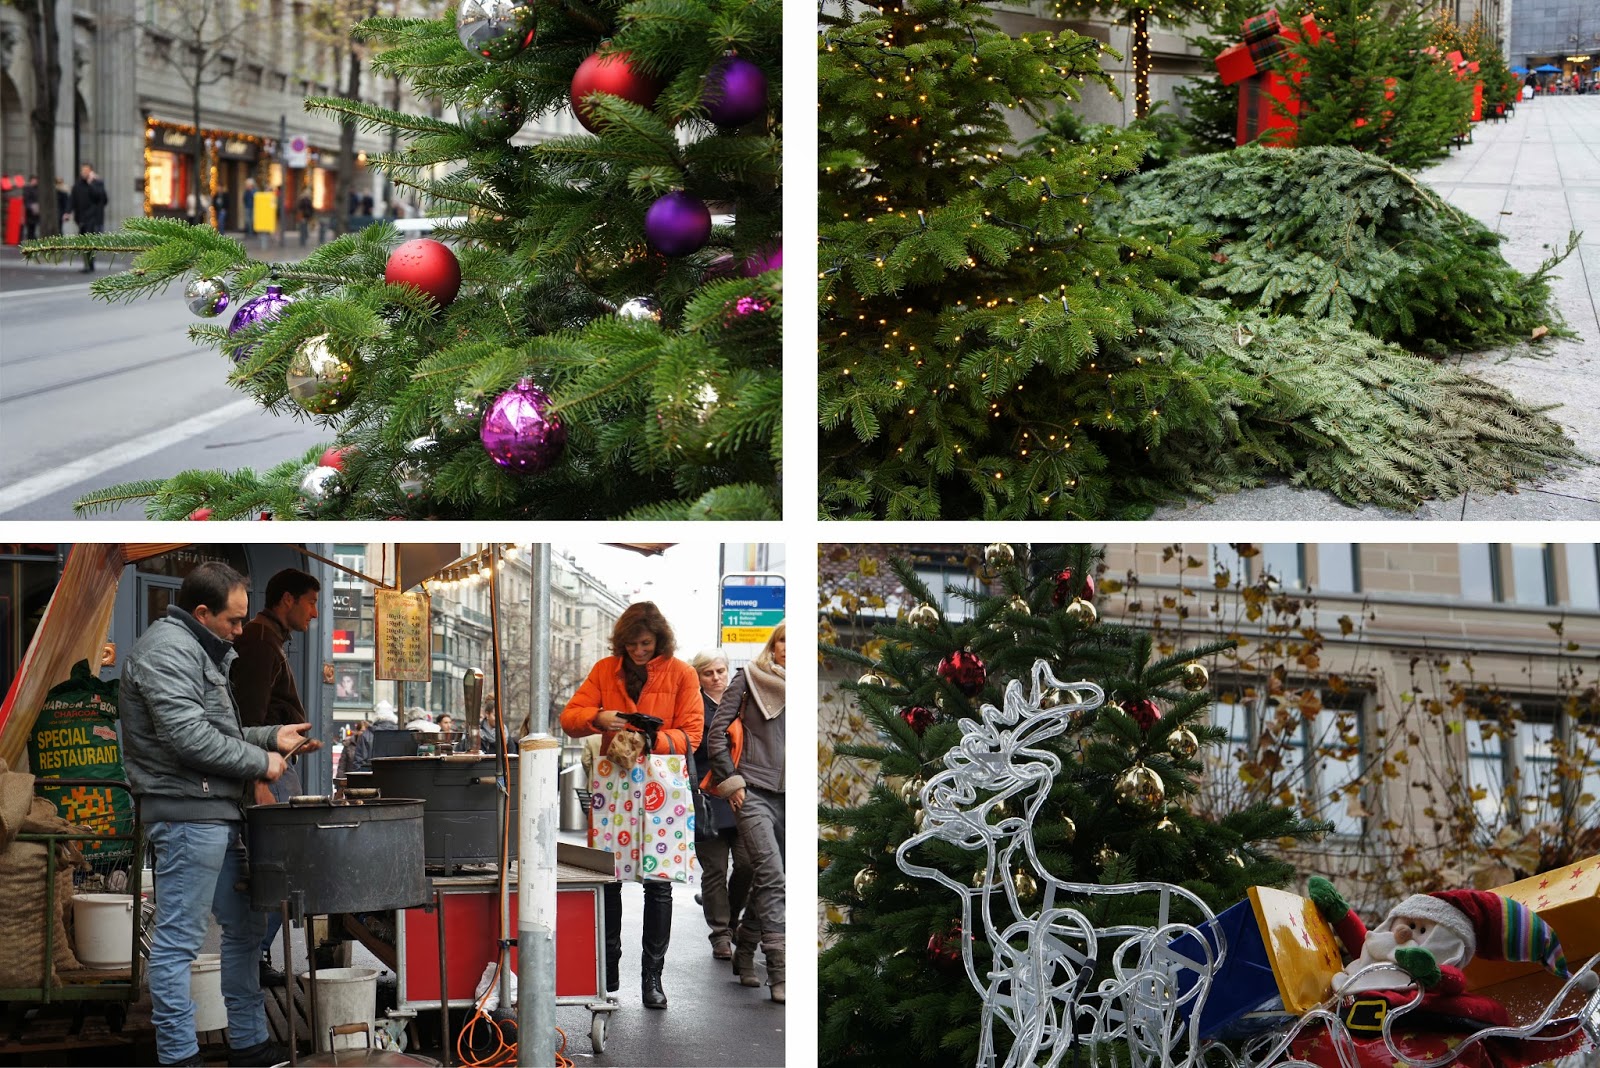 The Stroke Blog: Christmas in Zurich